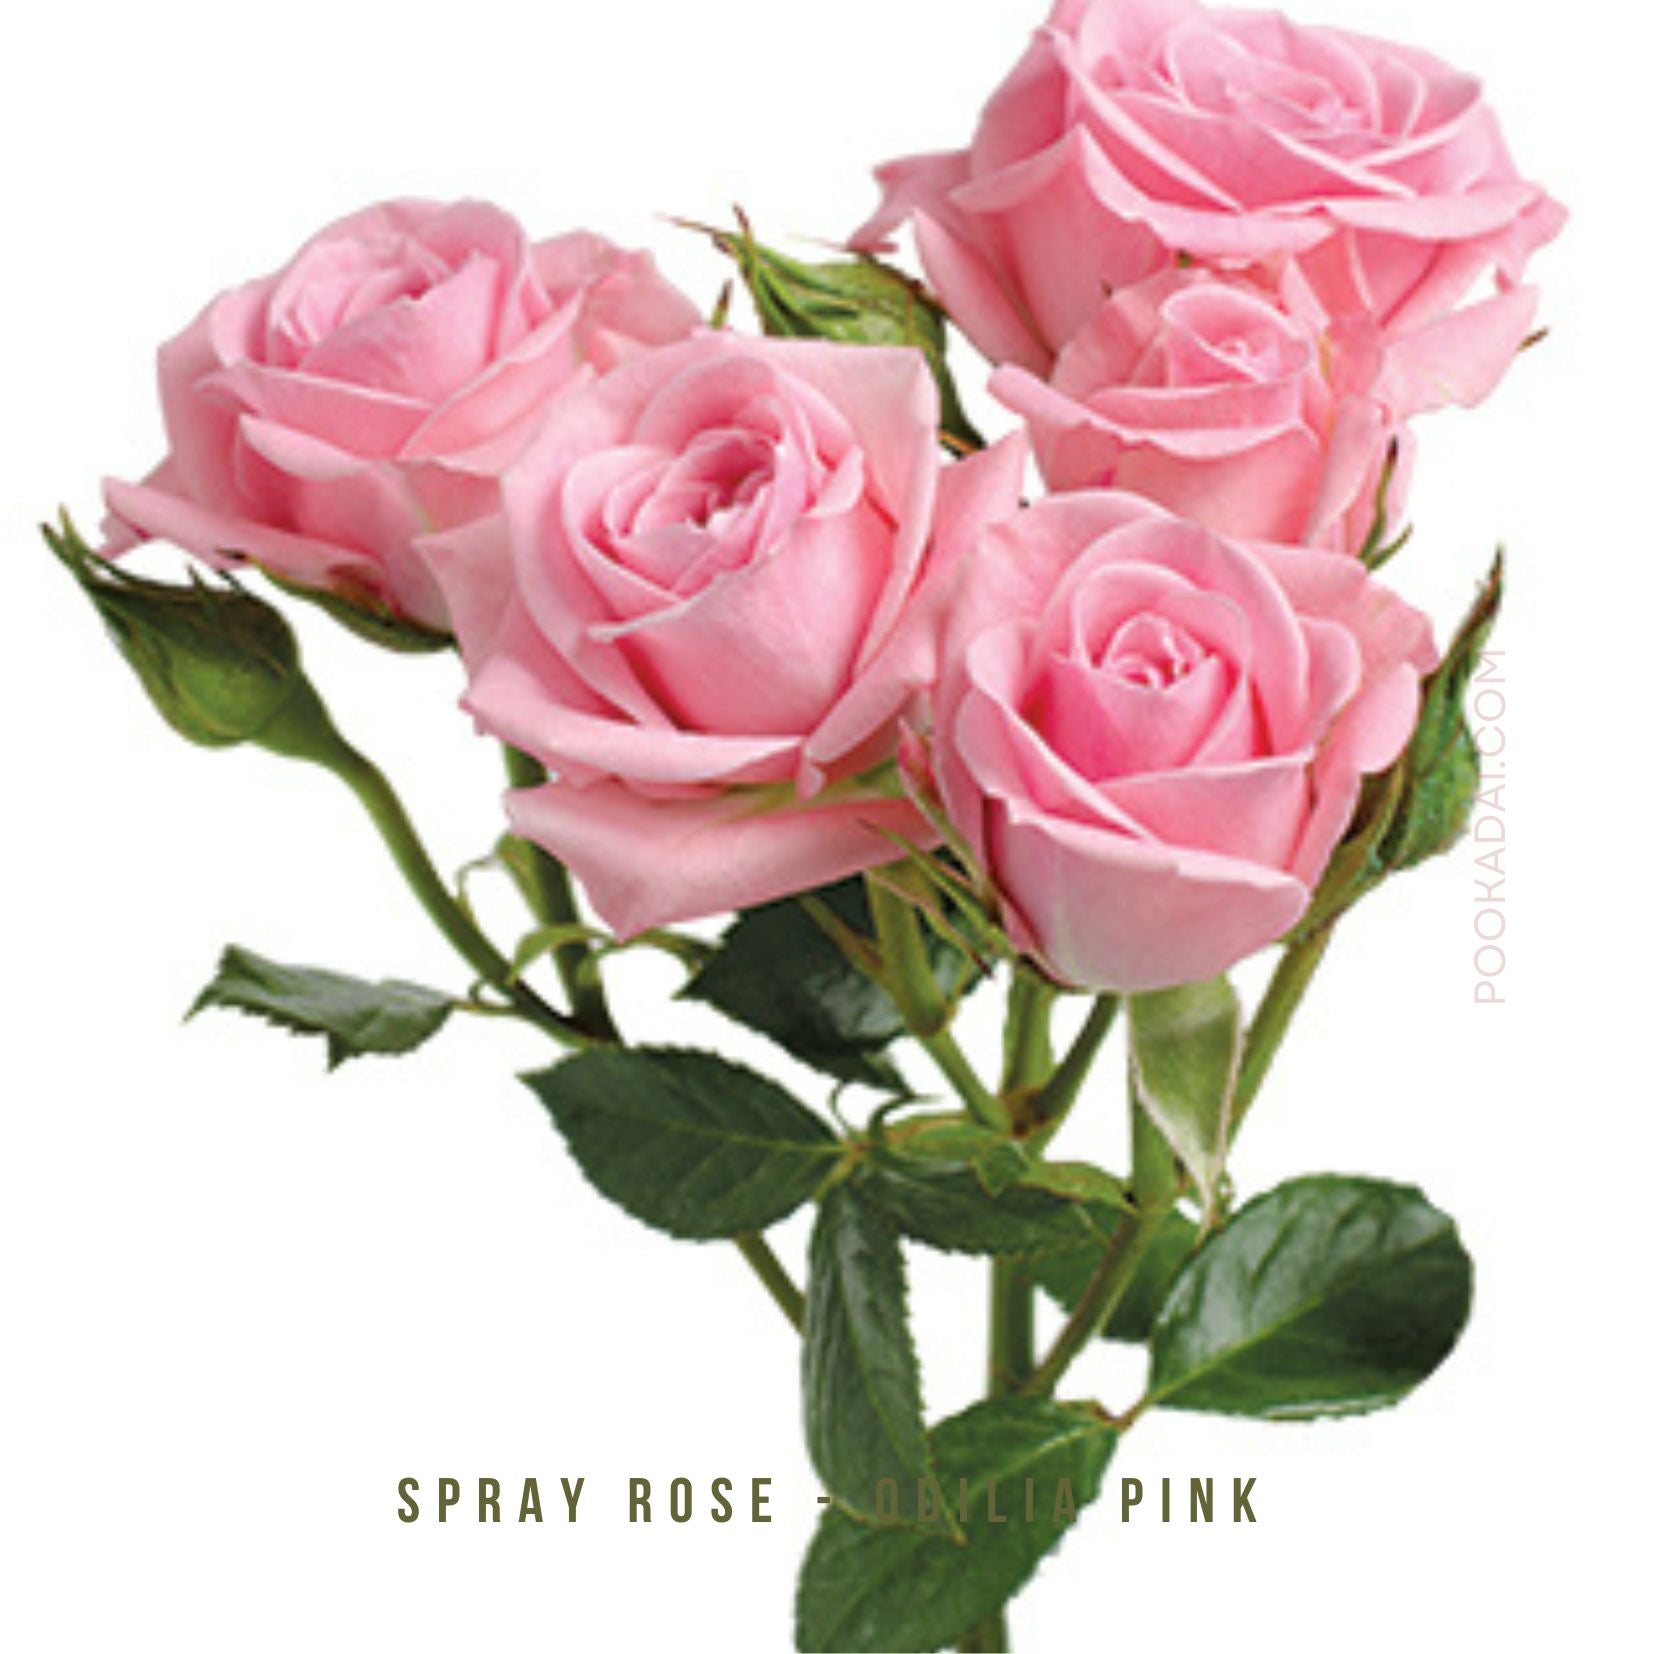 Flower Petals - Fresh Rose Petals – Pookadai Florist Toronto